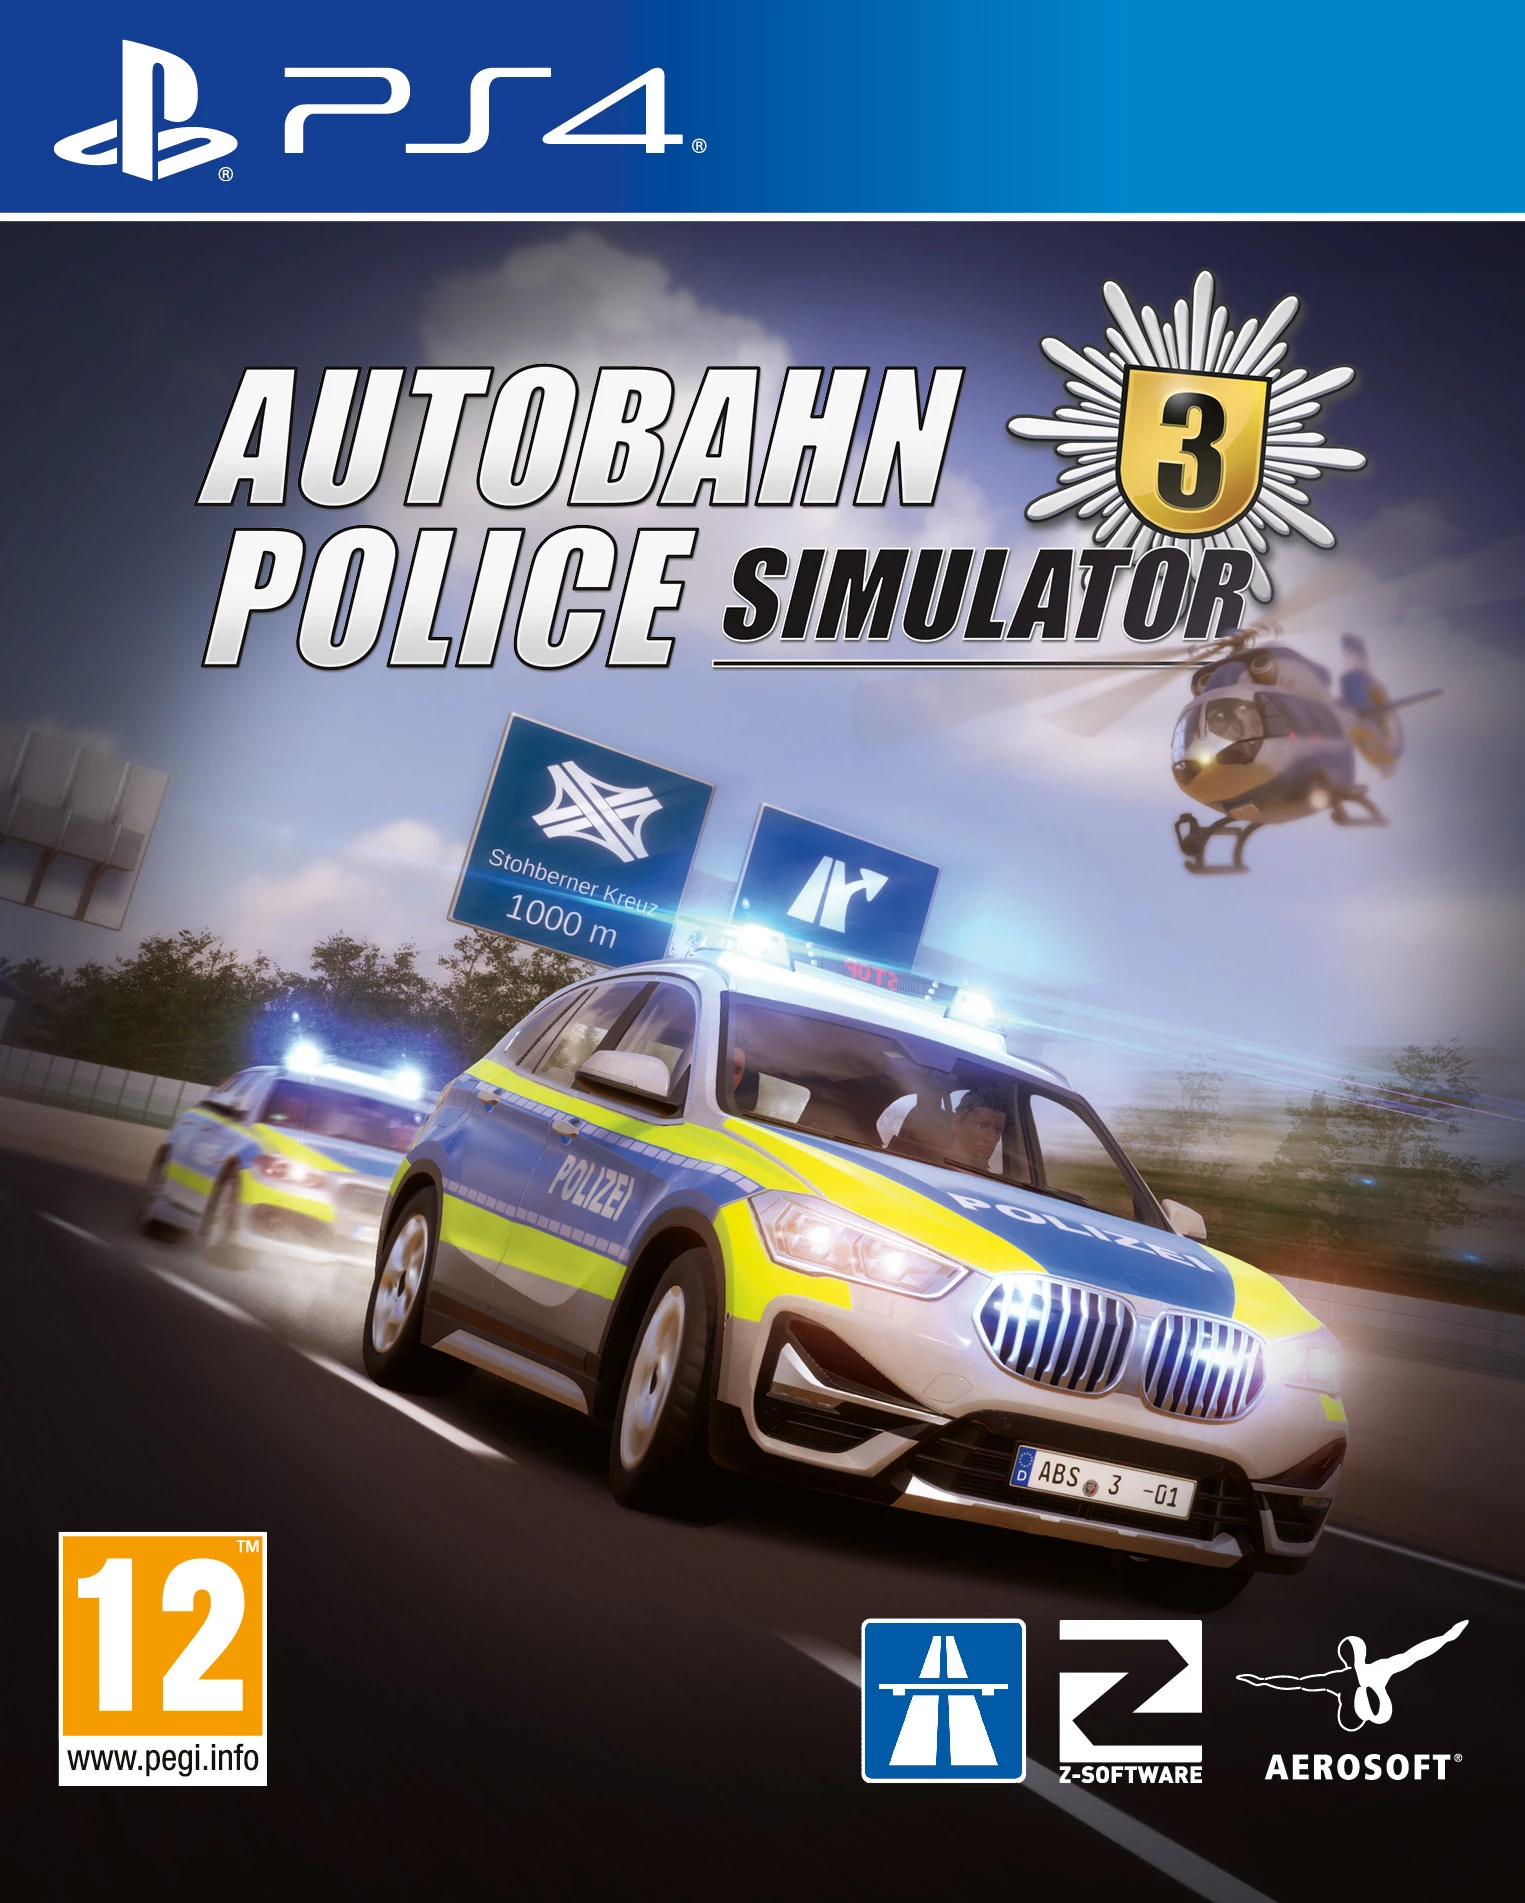 Autobahn Police Simulator 3 (PS4), Aerosoft